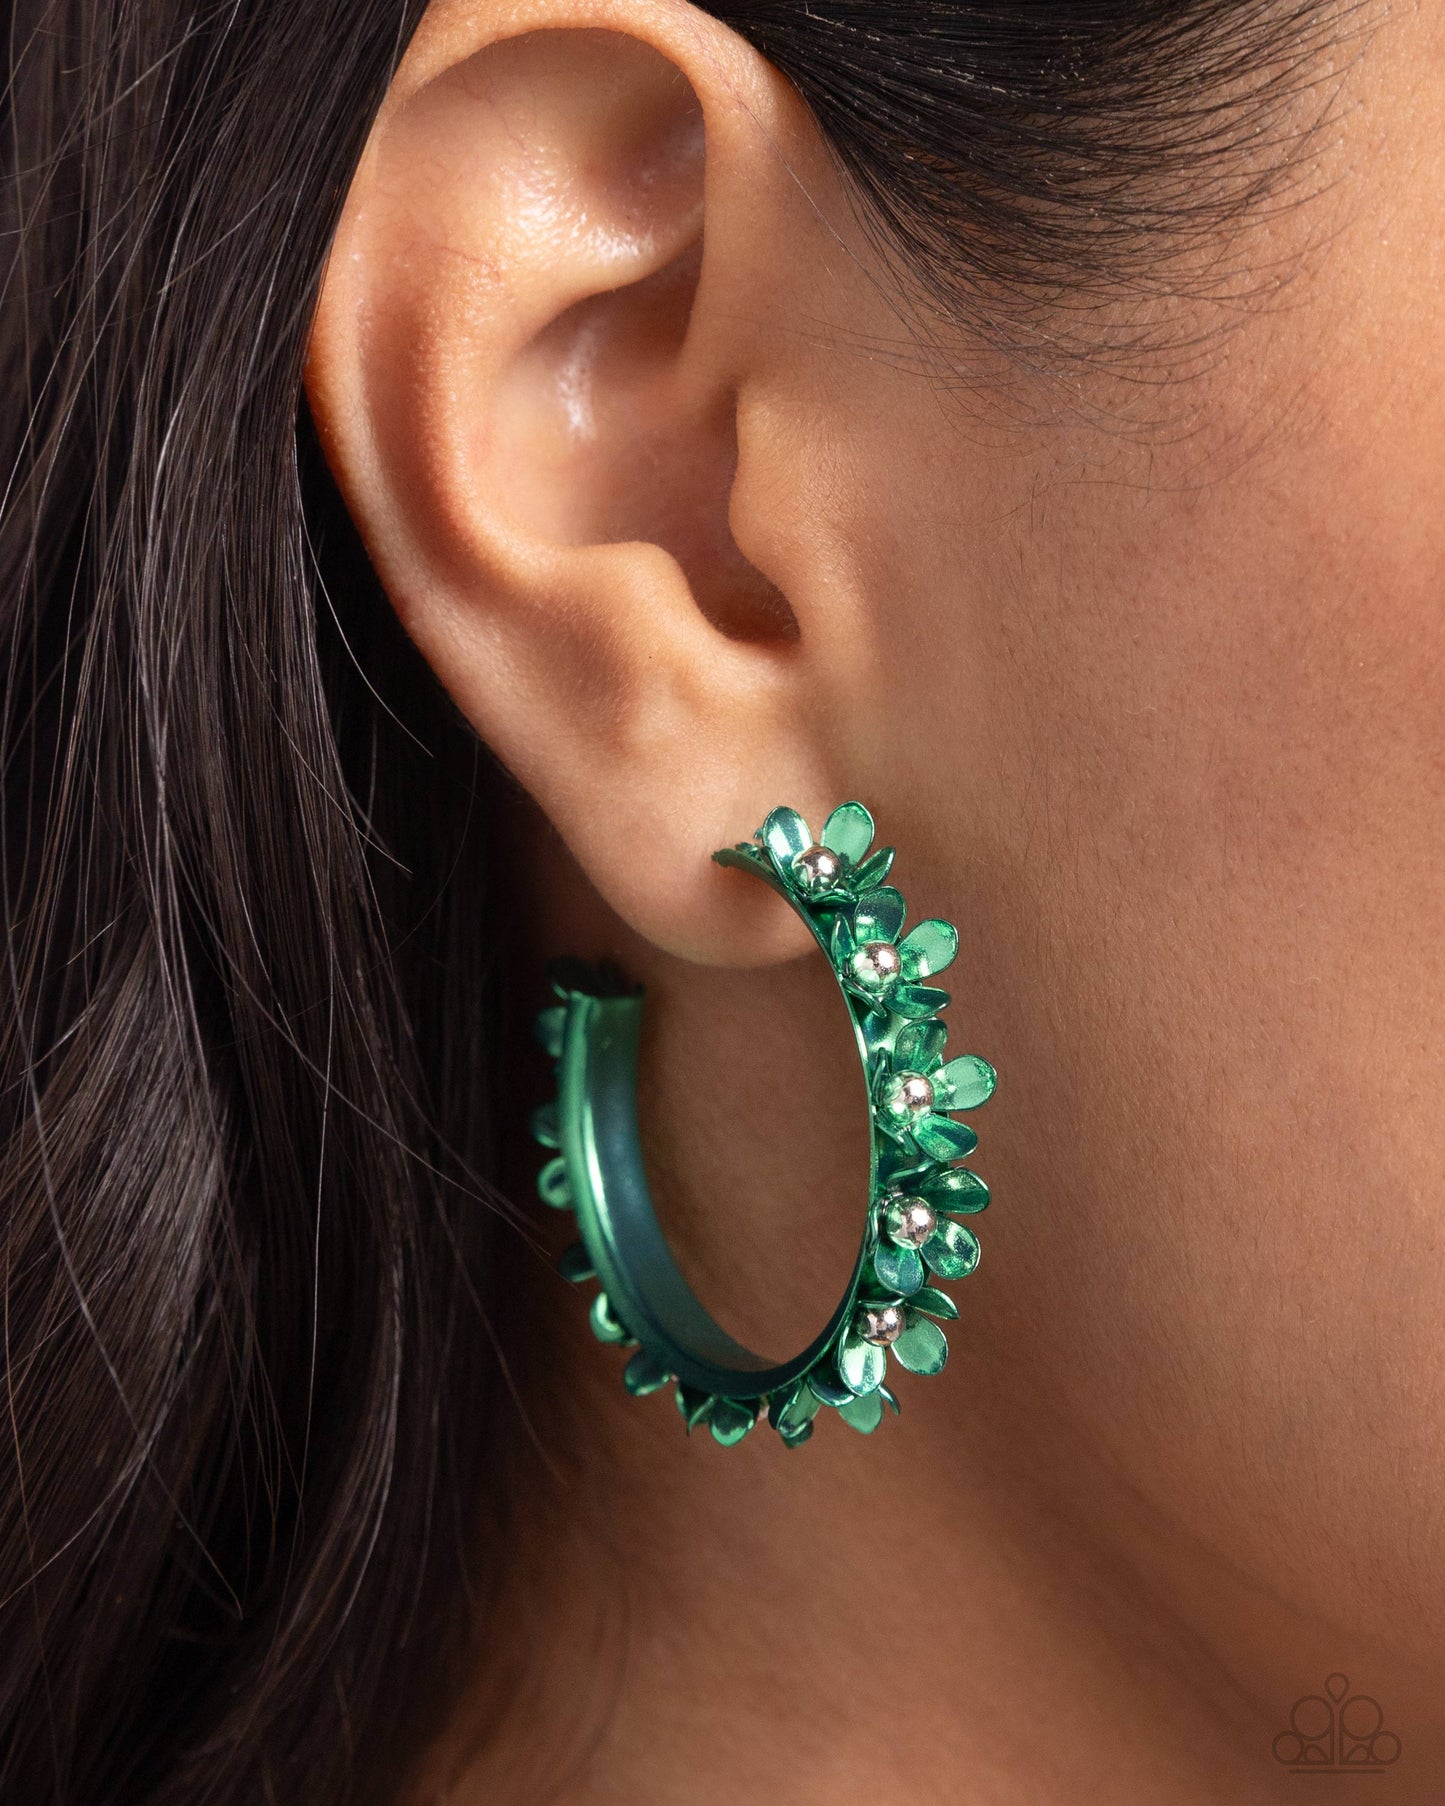 Fashionable Flower Crown - Green Earring